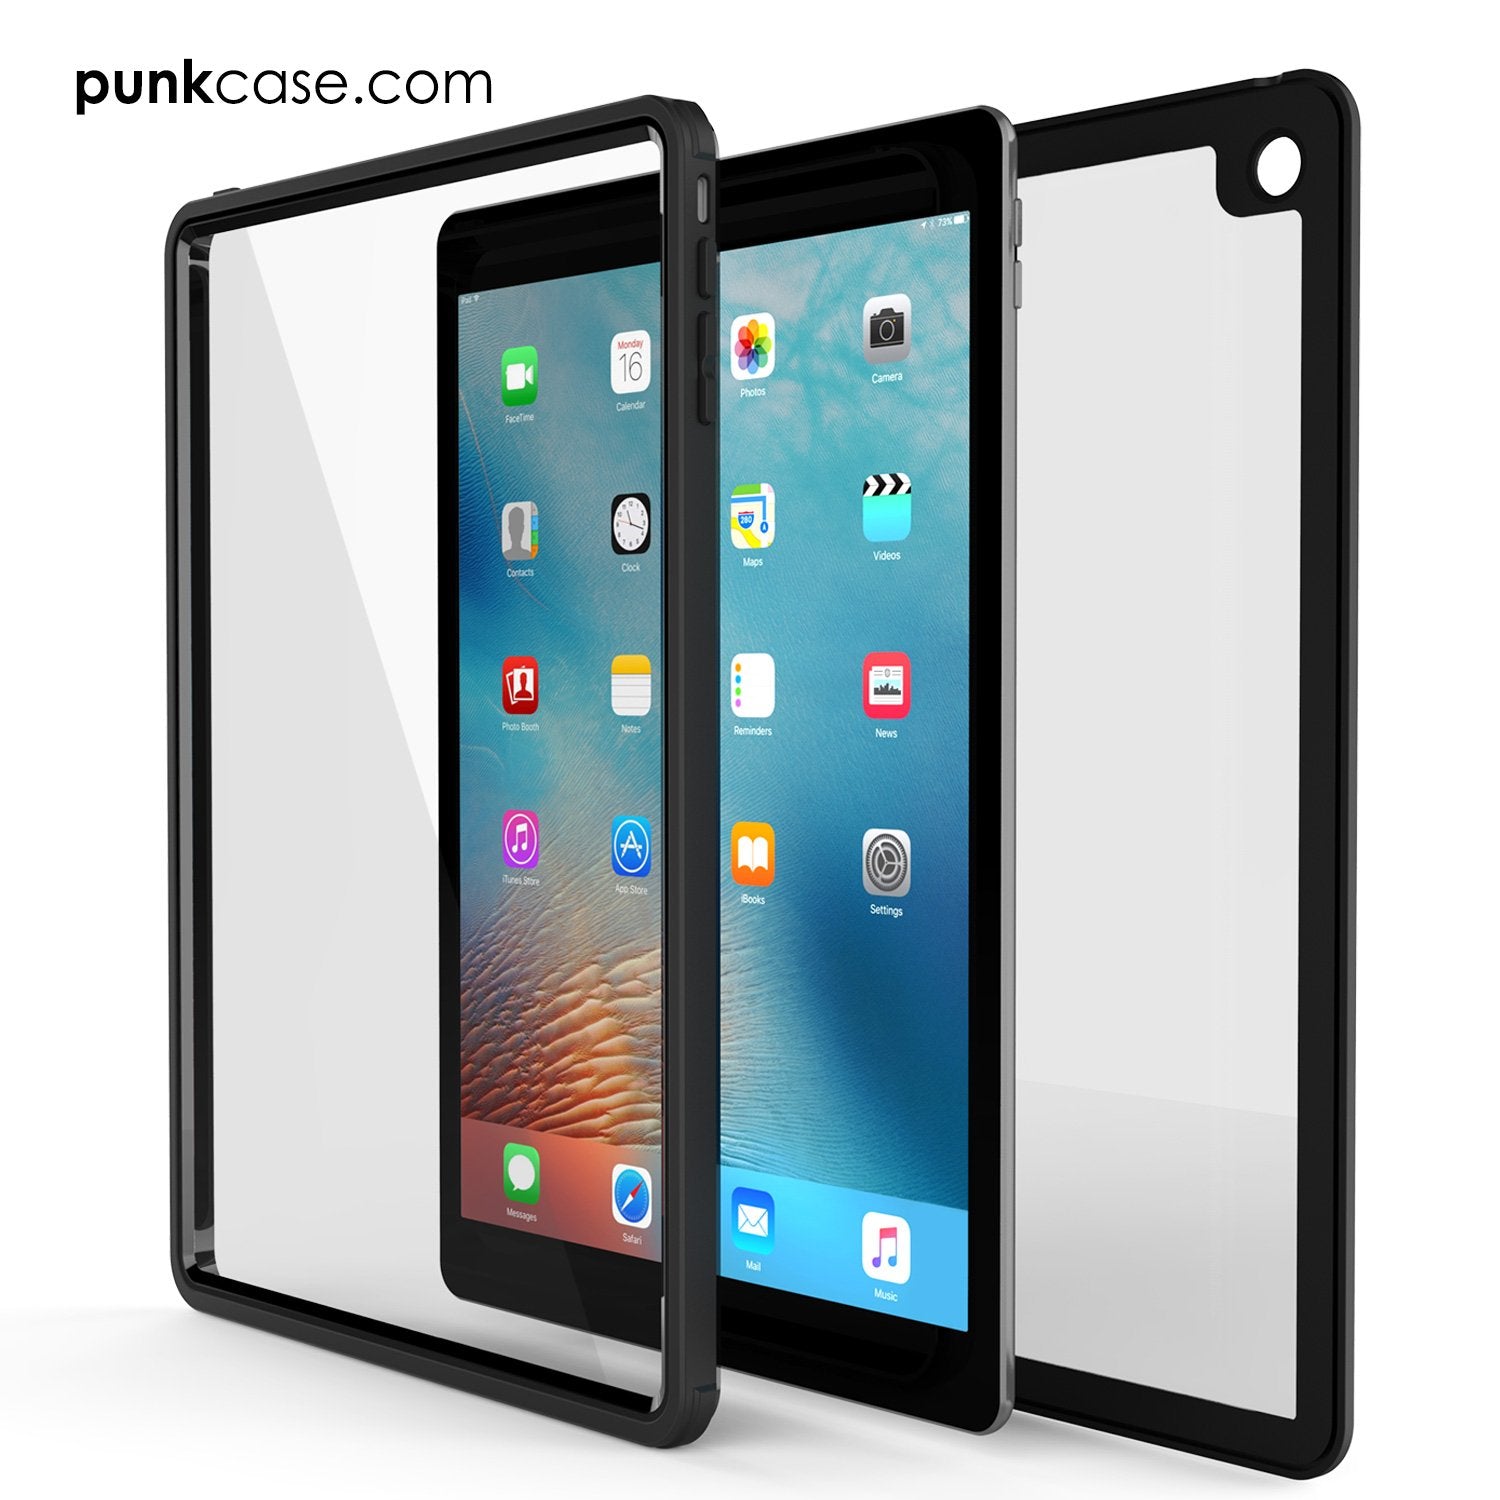 Punkcase iPad Pro 9.7 Case CRYSTAL Series Waterproof Cover [Black]